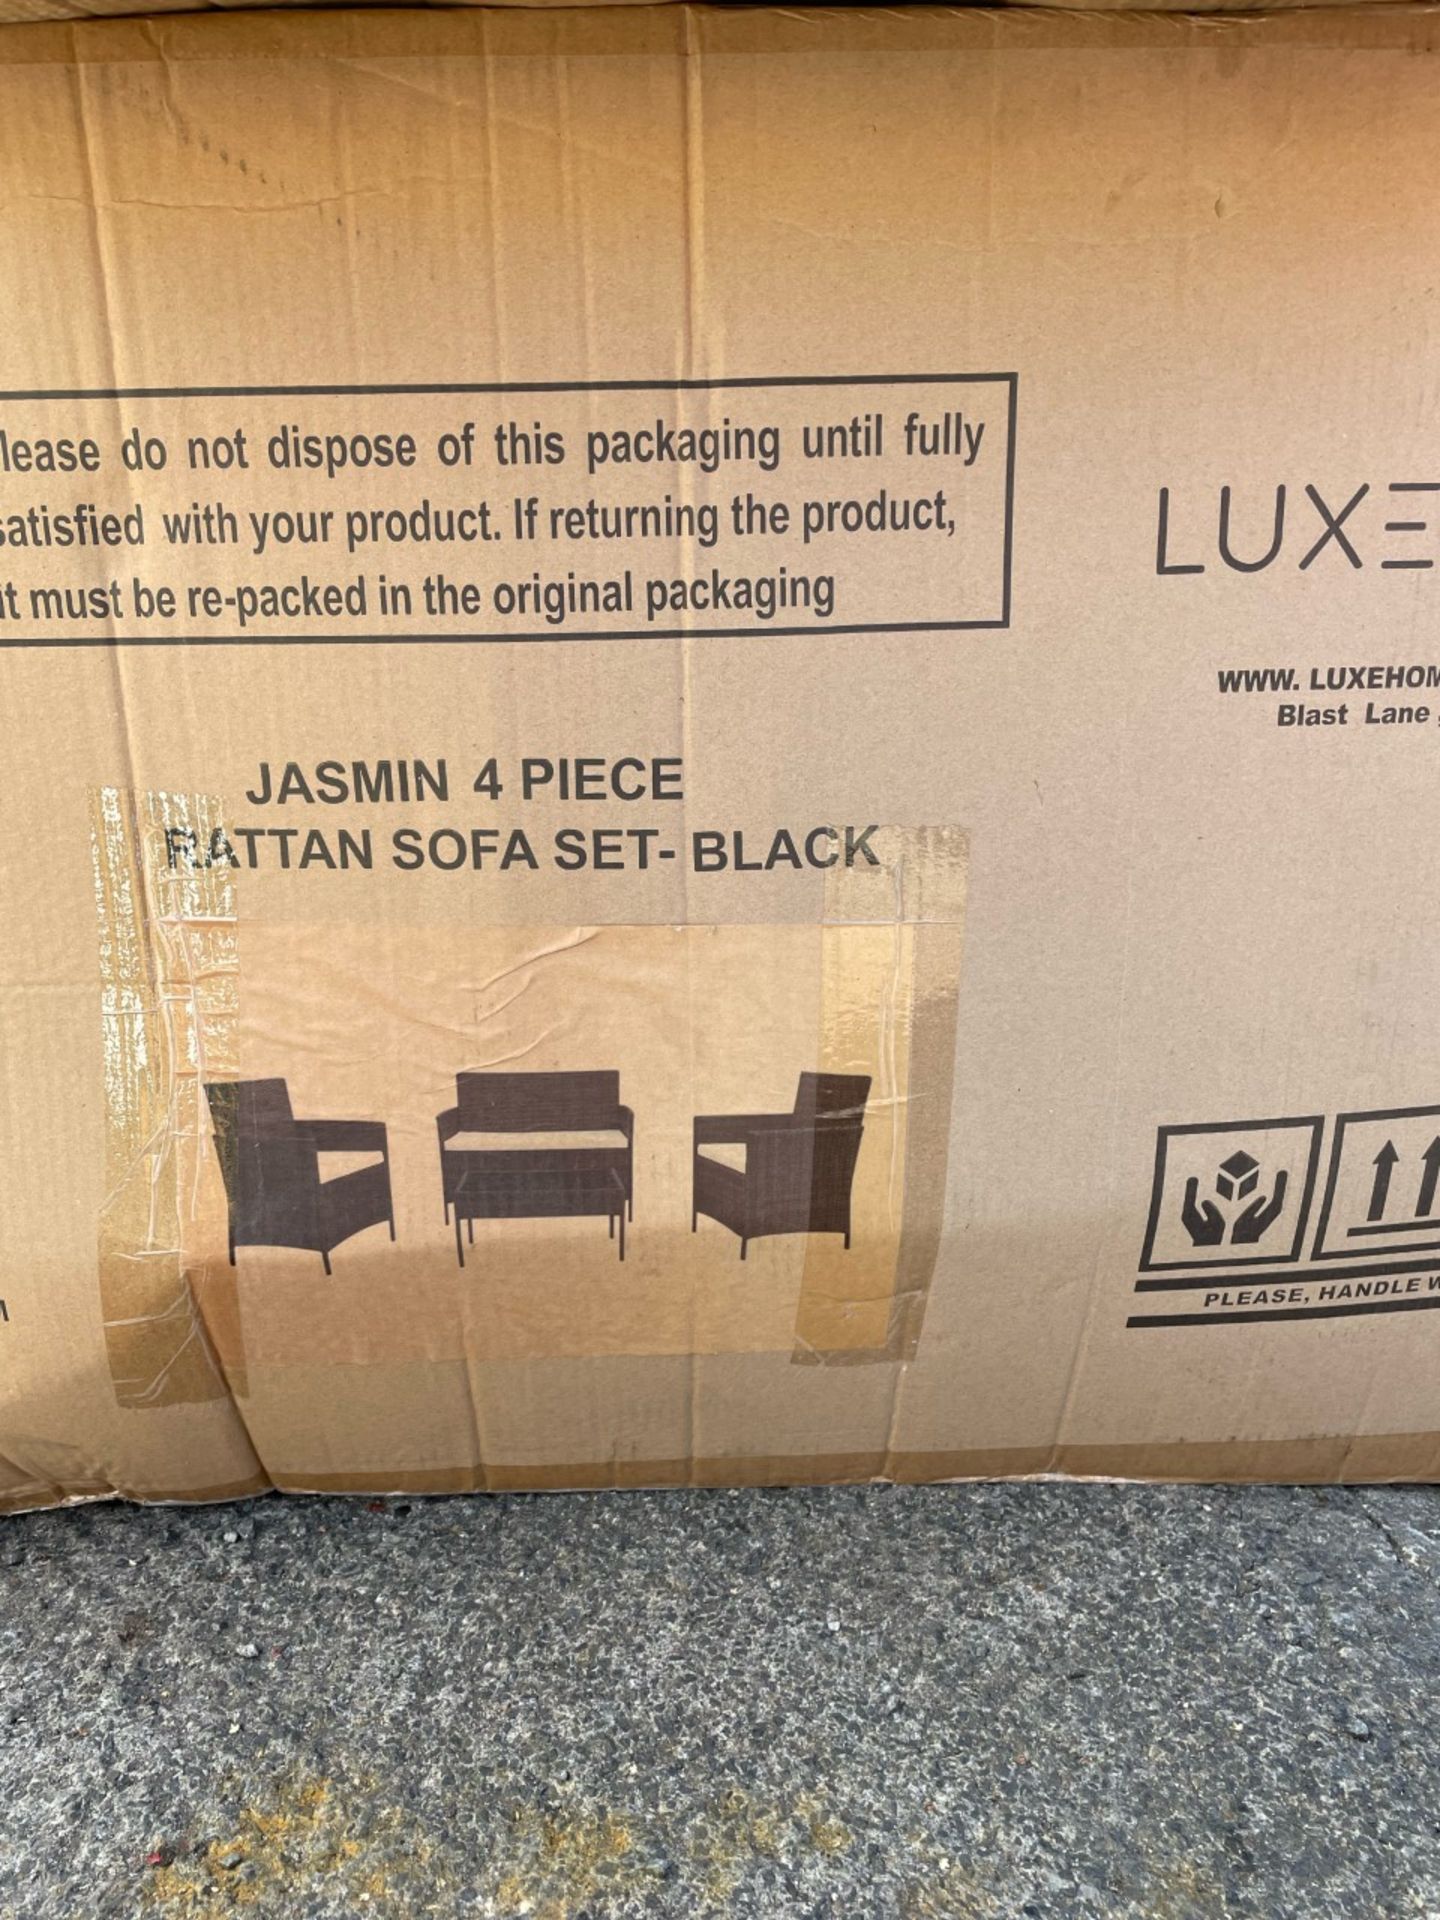 Jasmin 4 piece rattan sofa set in black